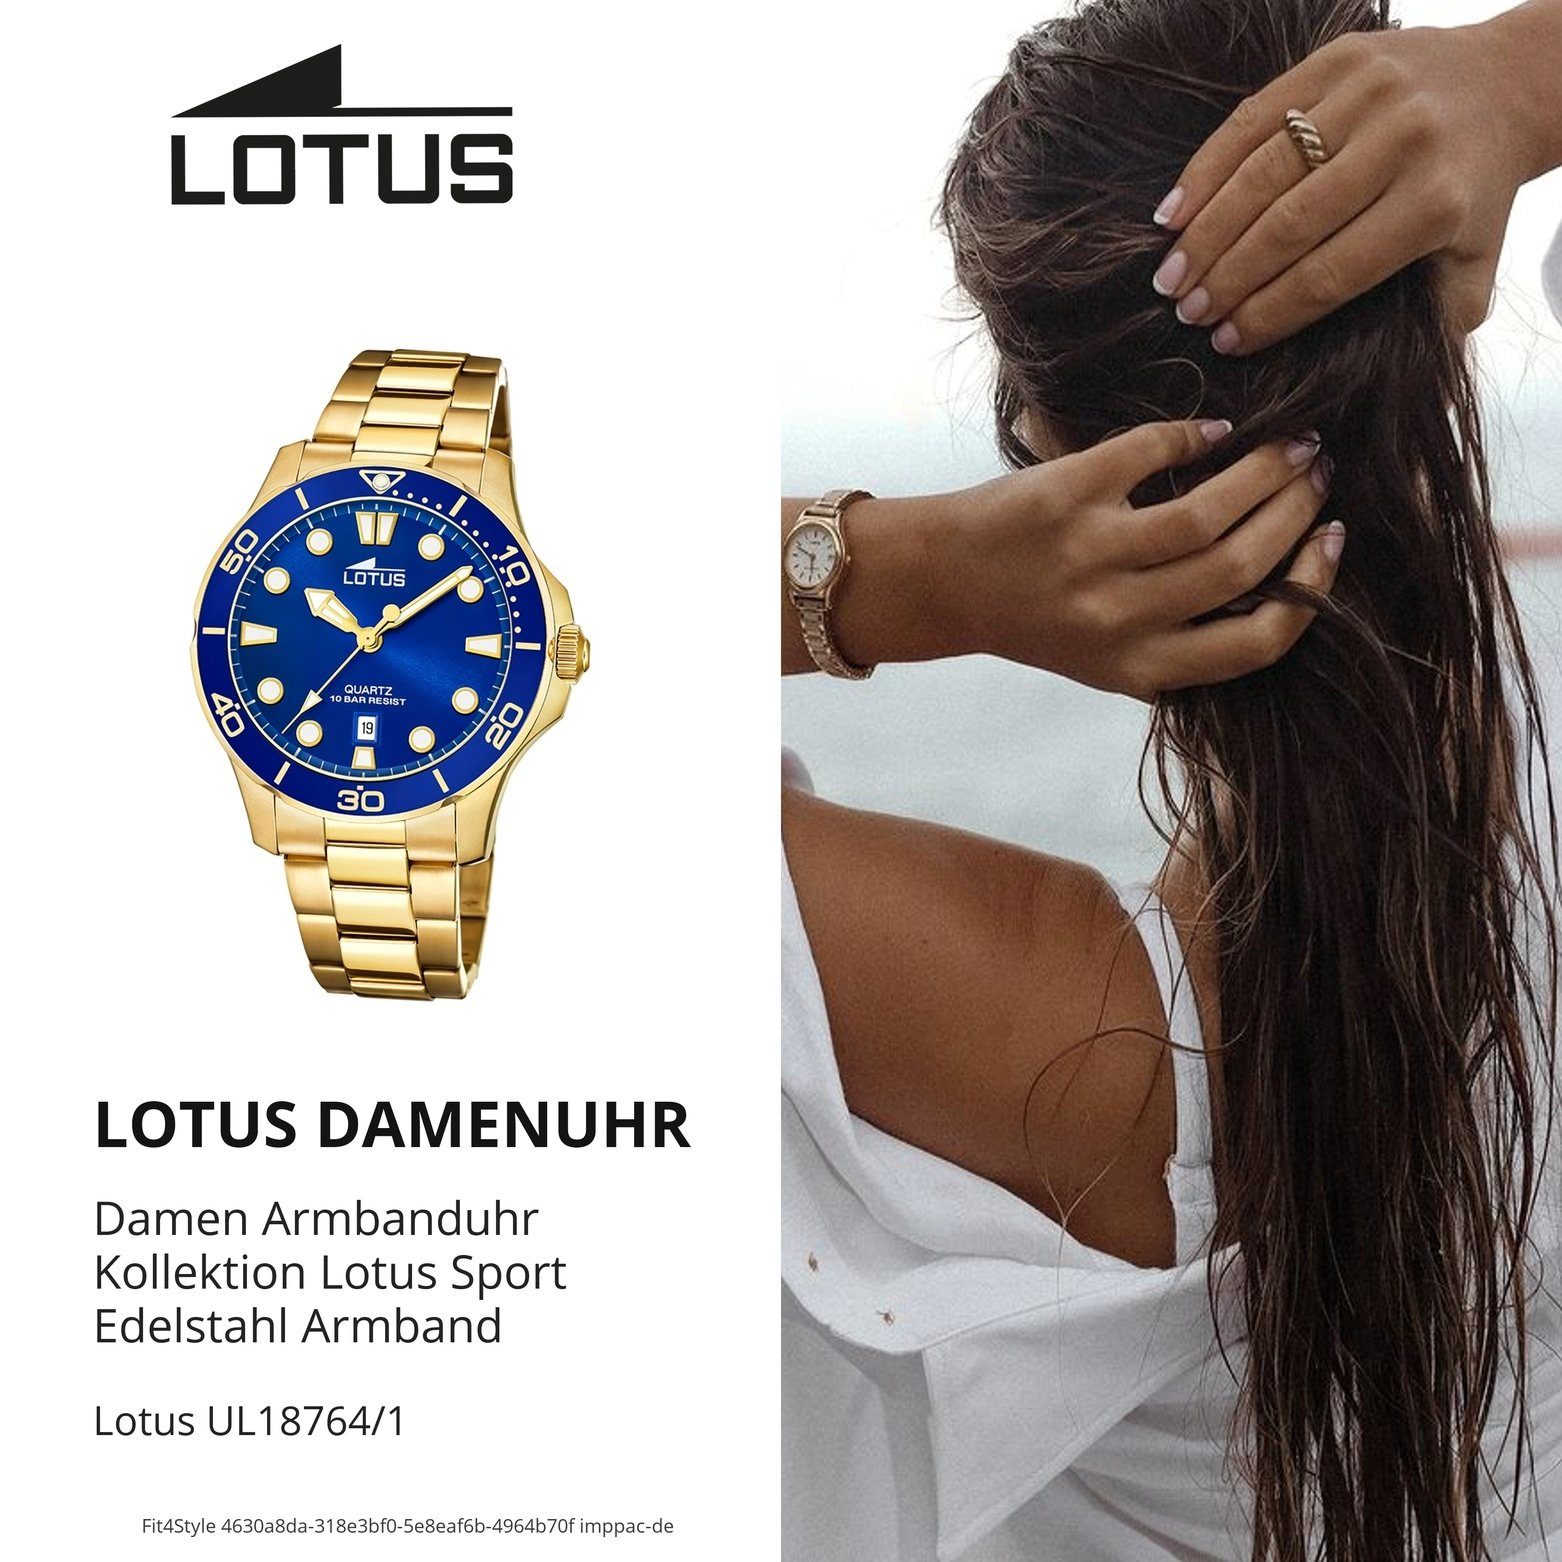 Lotus Quarzuhr Lotus Damen Damenuhr Sport mittel 39mm) Armbanduhr (ca. Edelstahlarmband gold rund, 18764/1